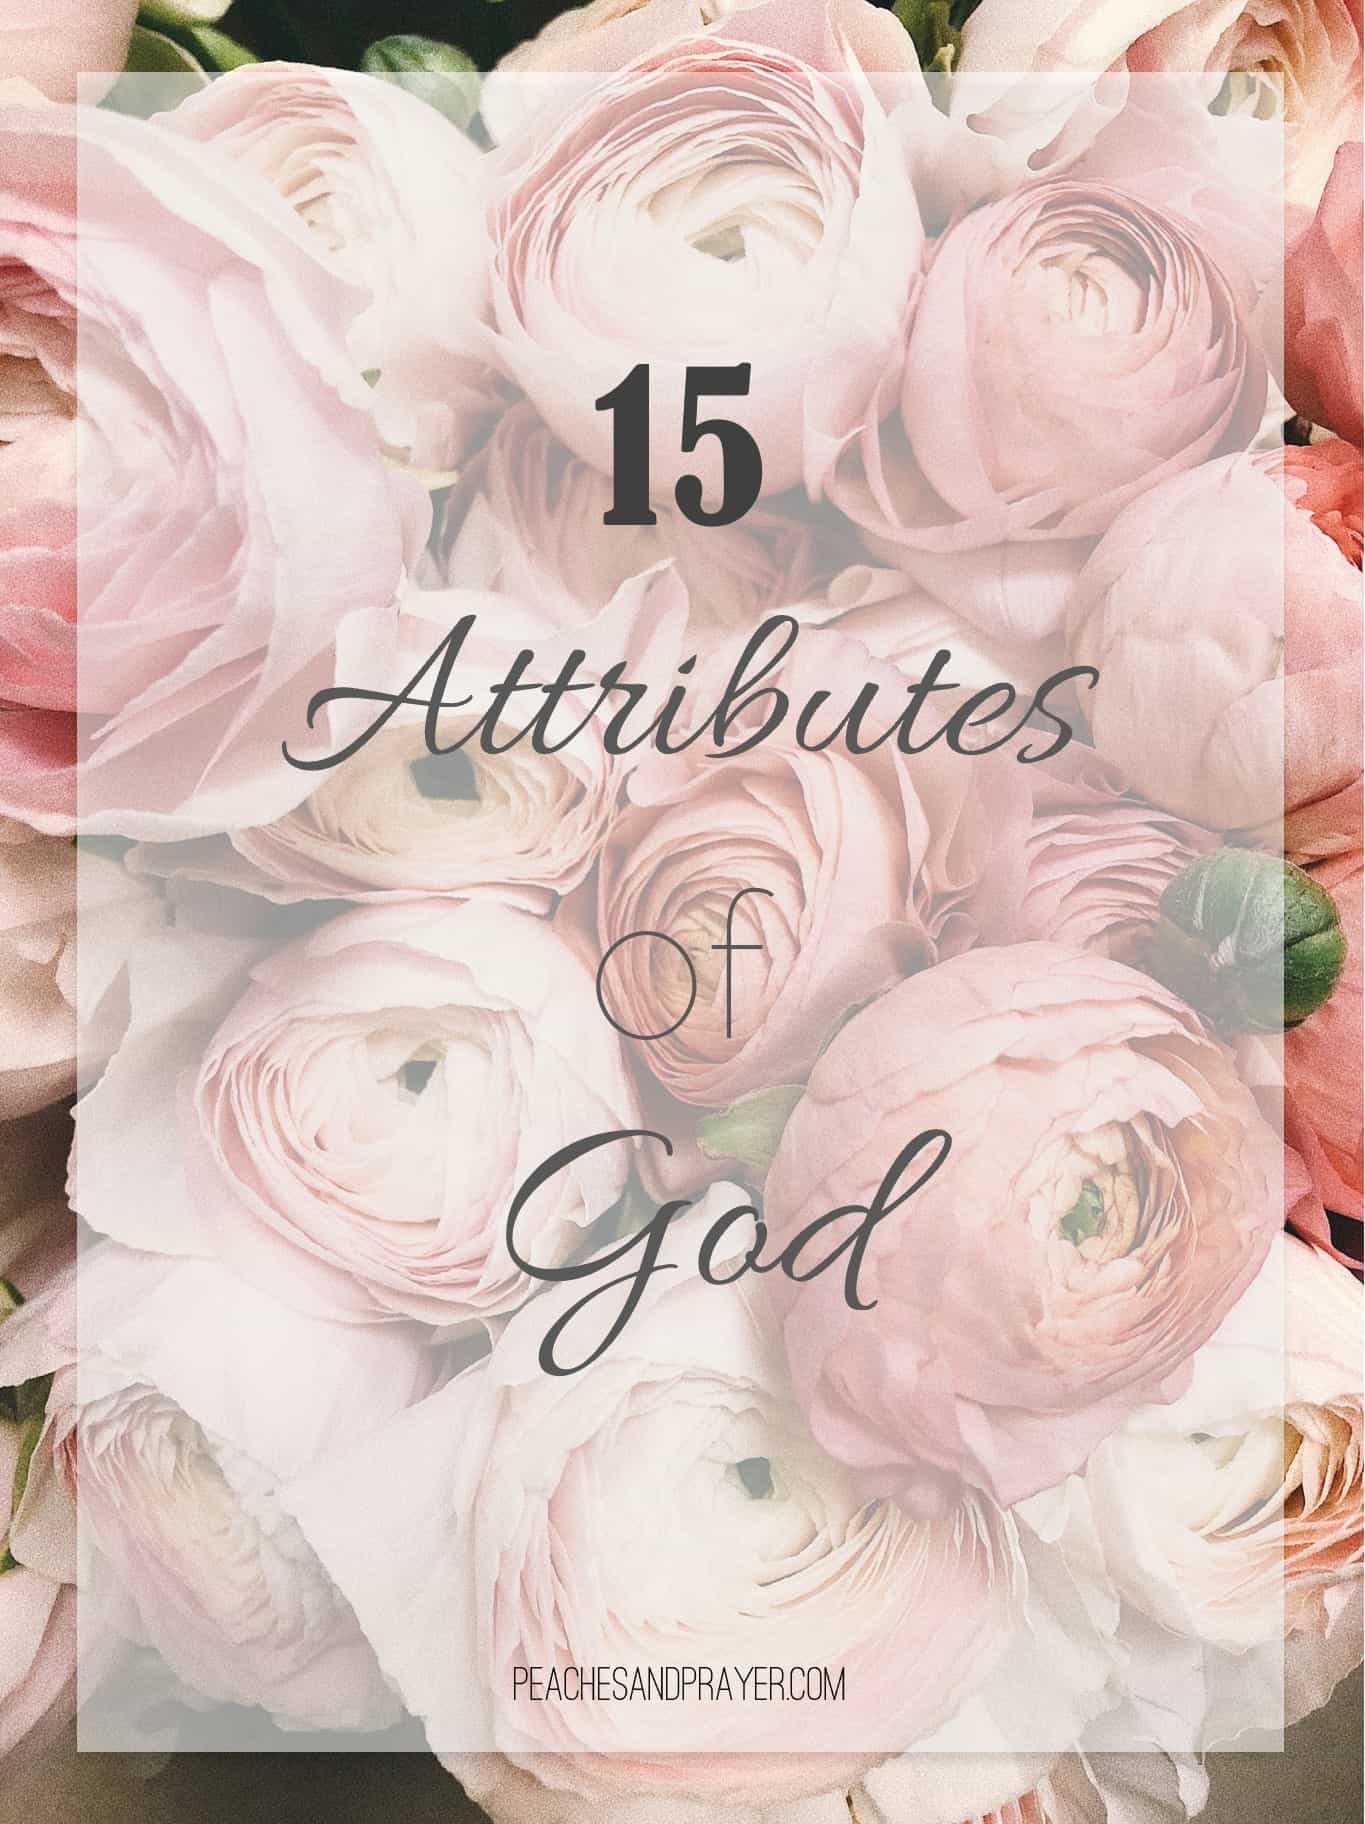 15 Attributes of God